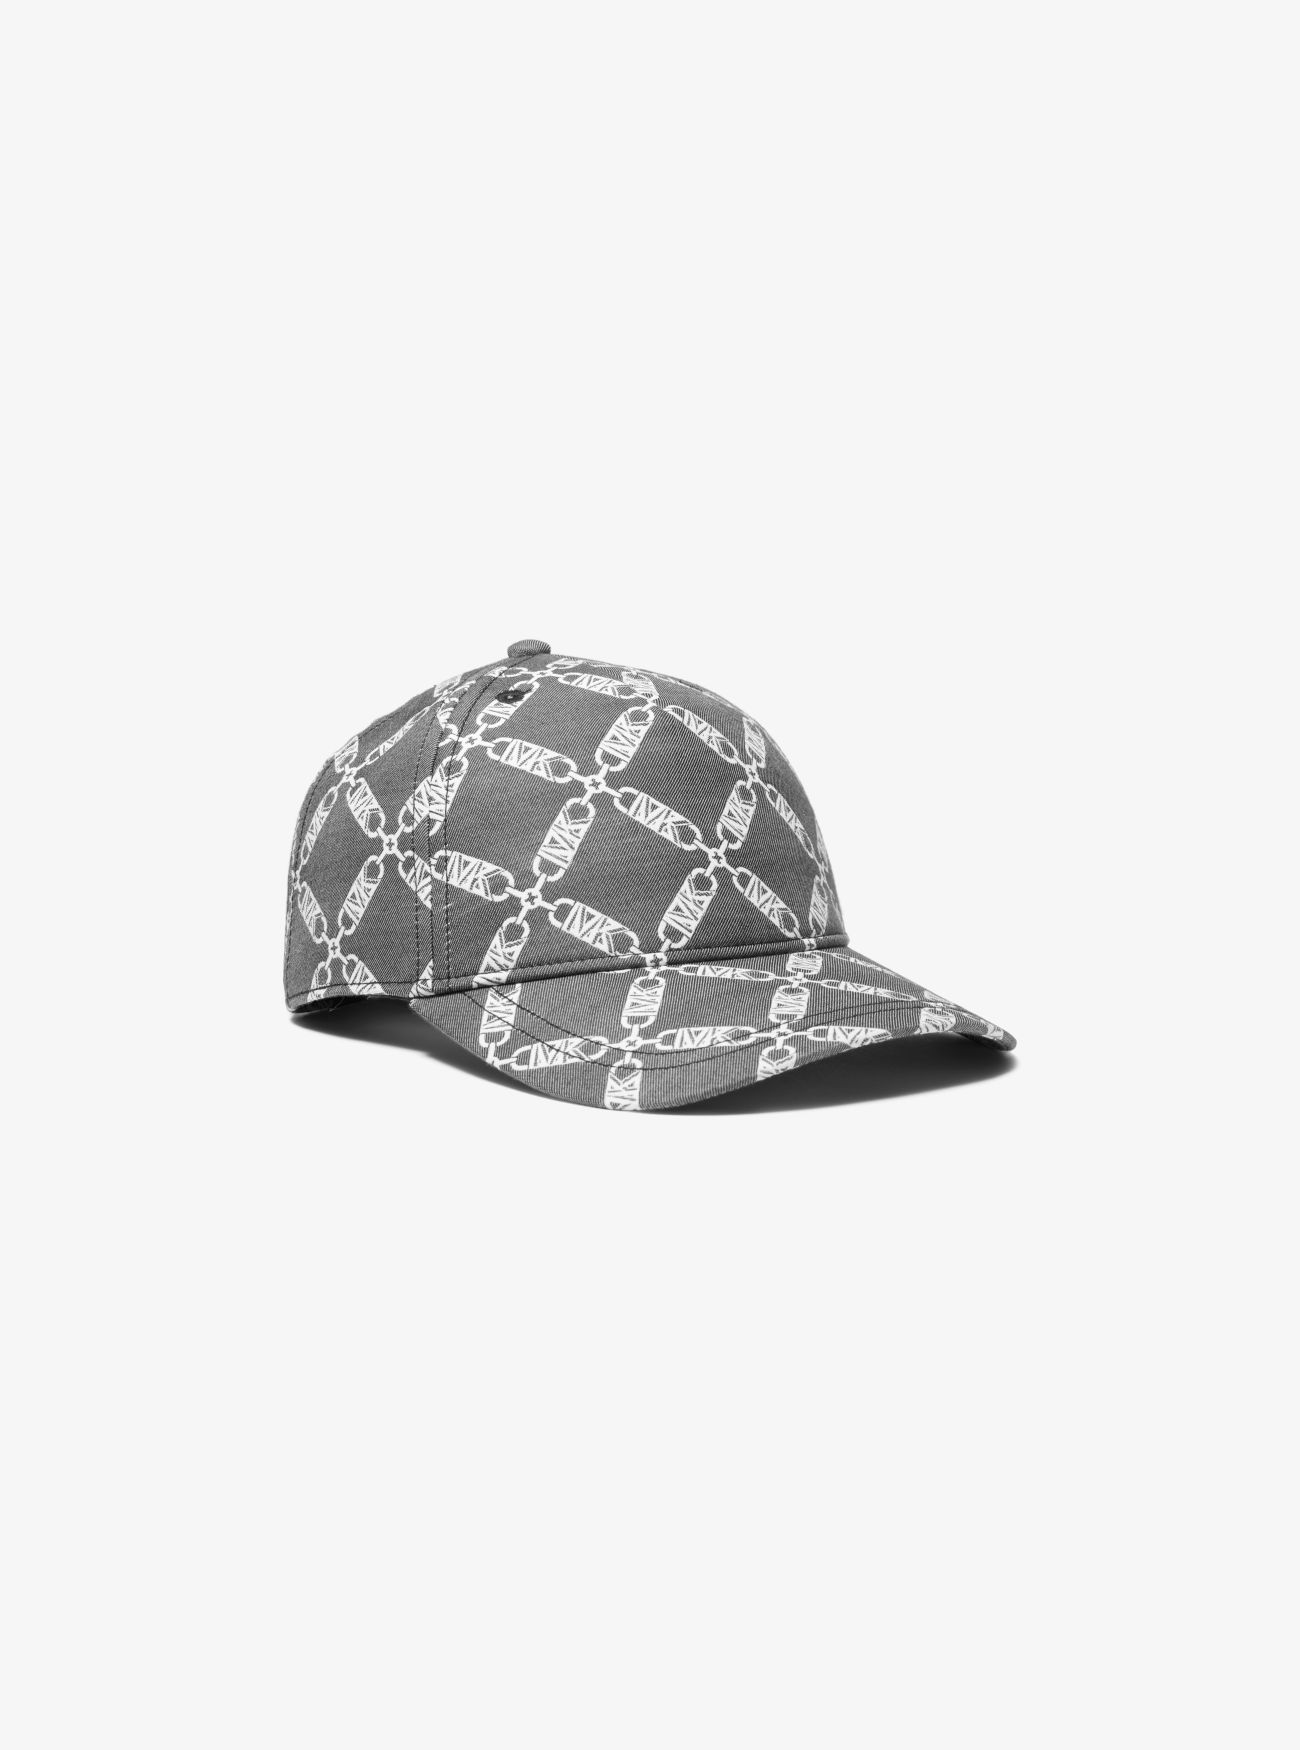 MK Empire Logo Jacquard Baseball Hat - Black/white - Michael Kors